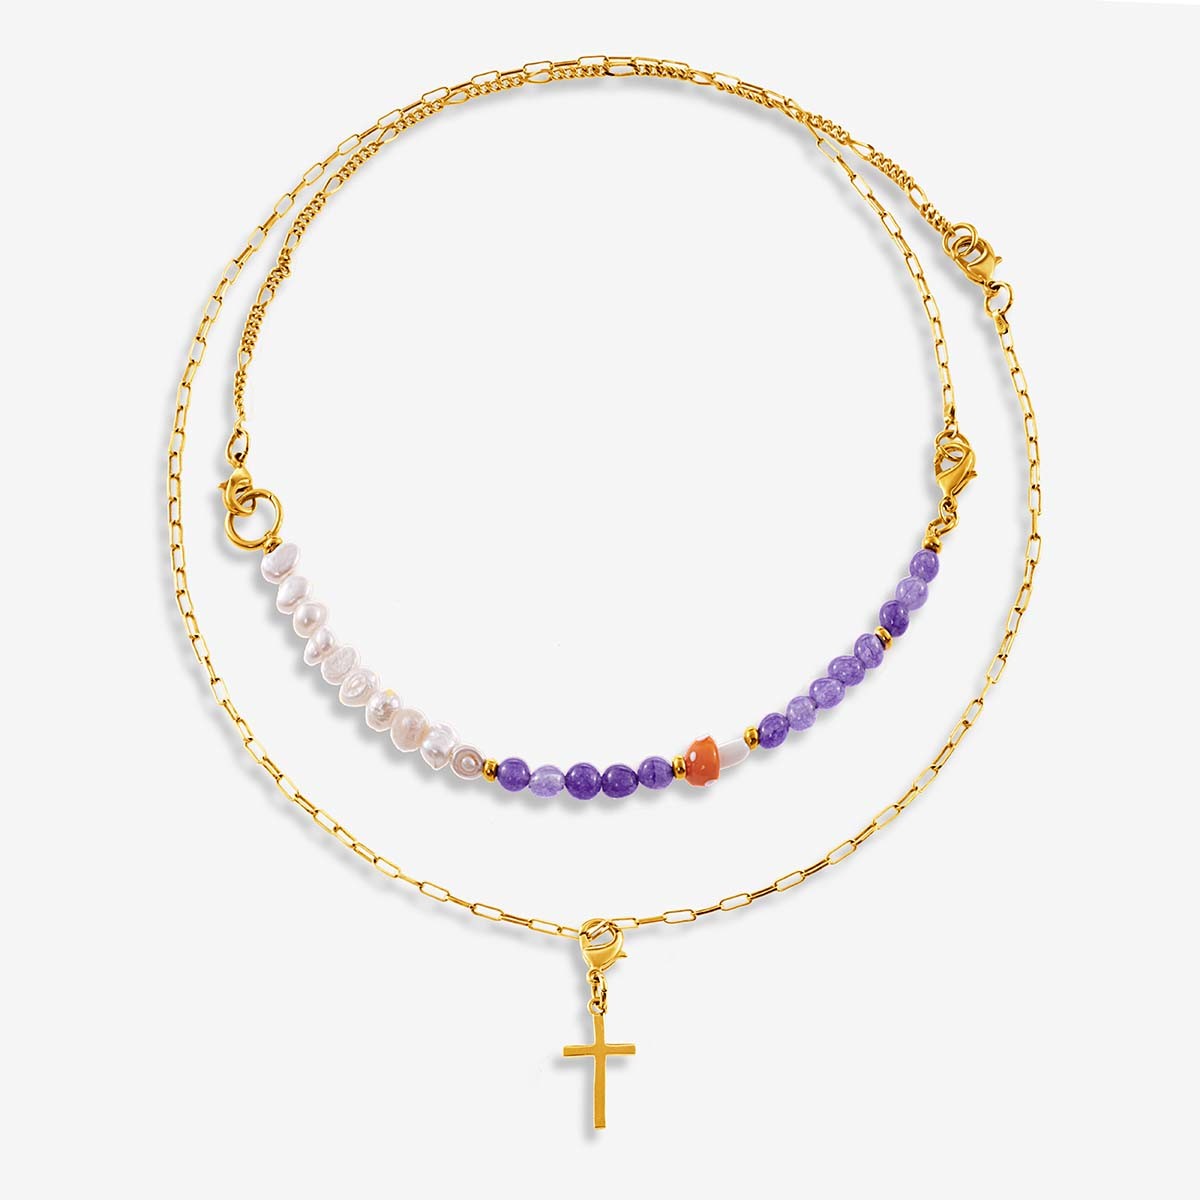 Rebel Rosary Necklace - Halsketten - Lila und Orange - 18k vergoldet